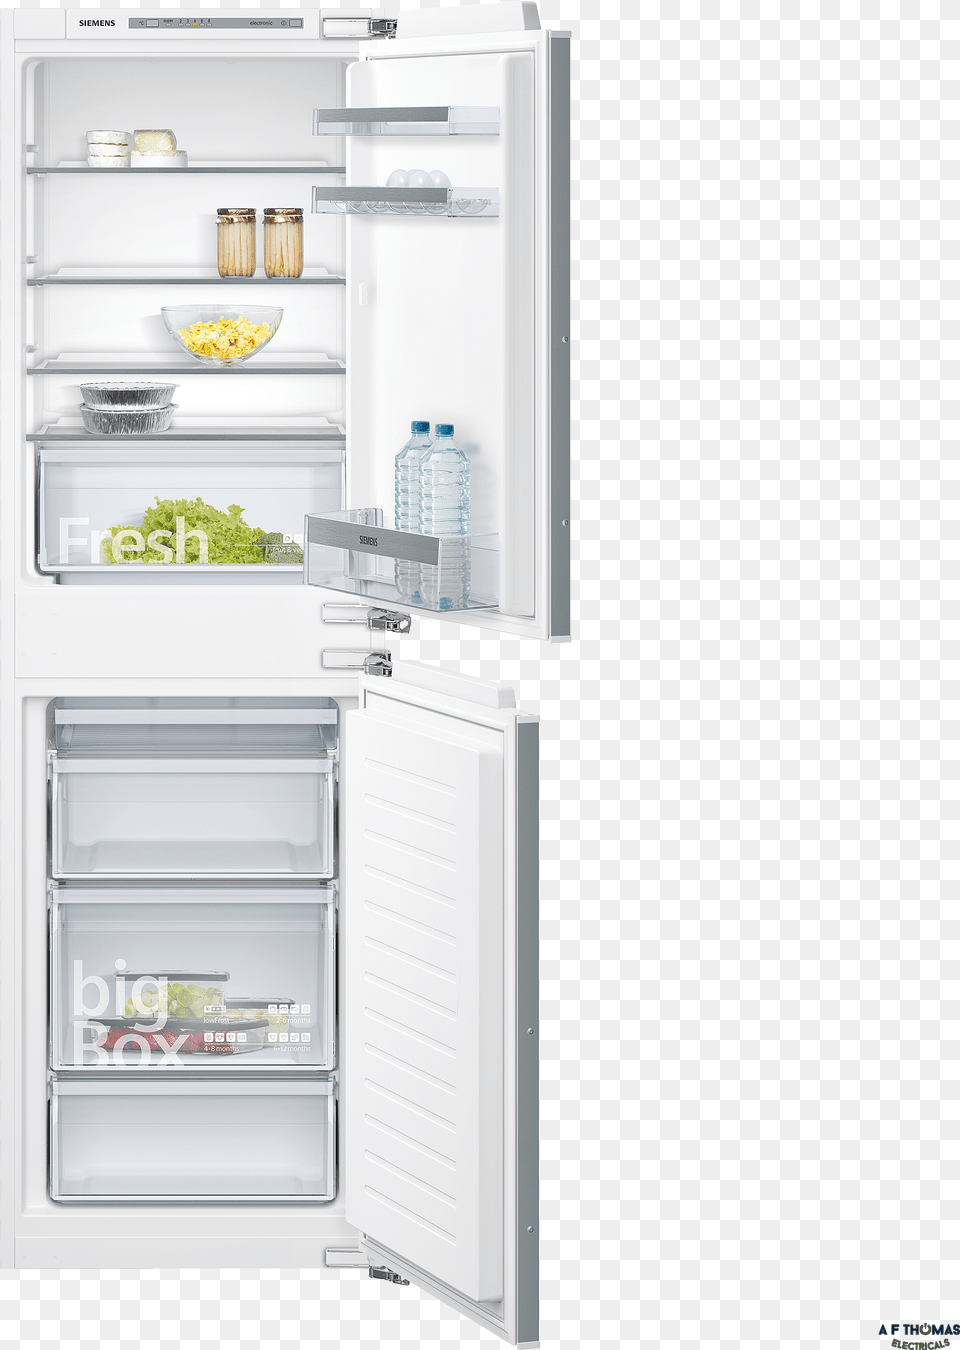 Siemens Ki85vvf30g Built In Fridge Freezer, Appliance, Device, Electrical Device, Refrigerator Free Transparent Png